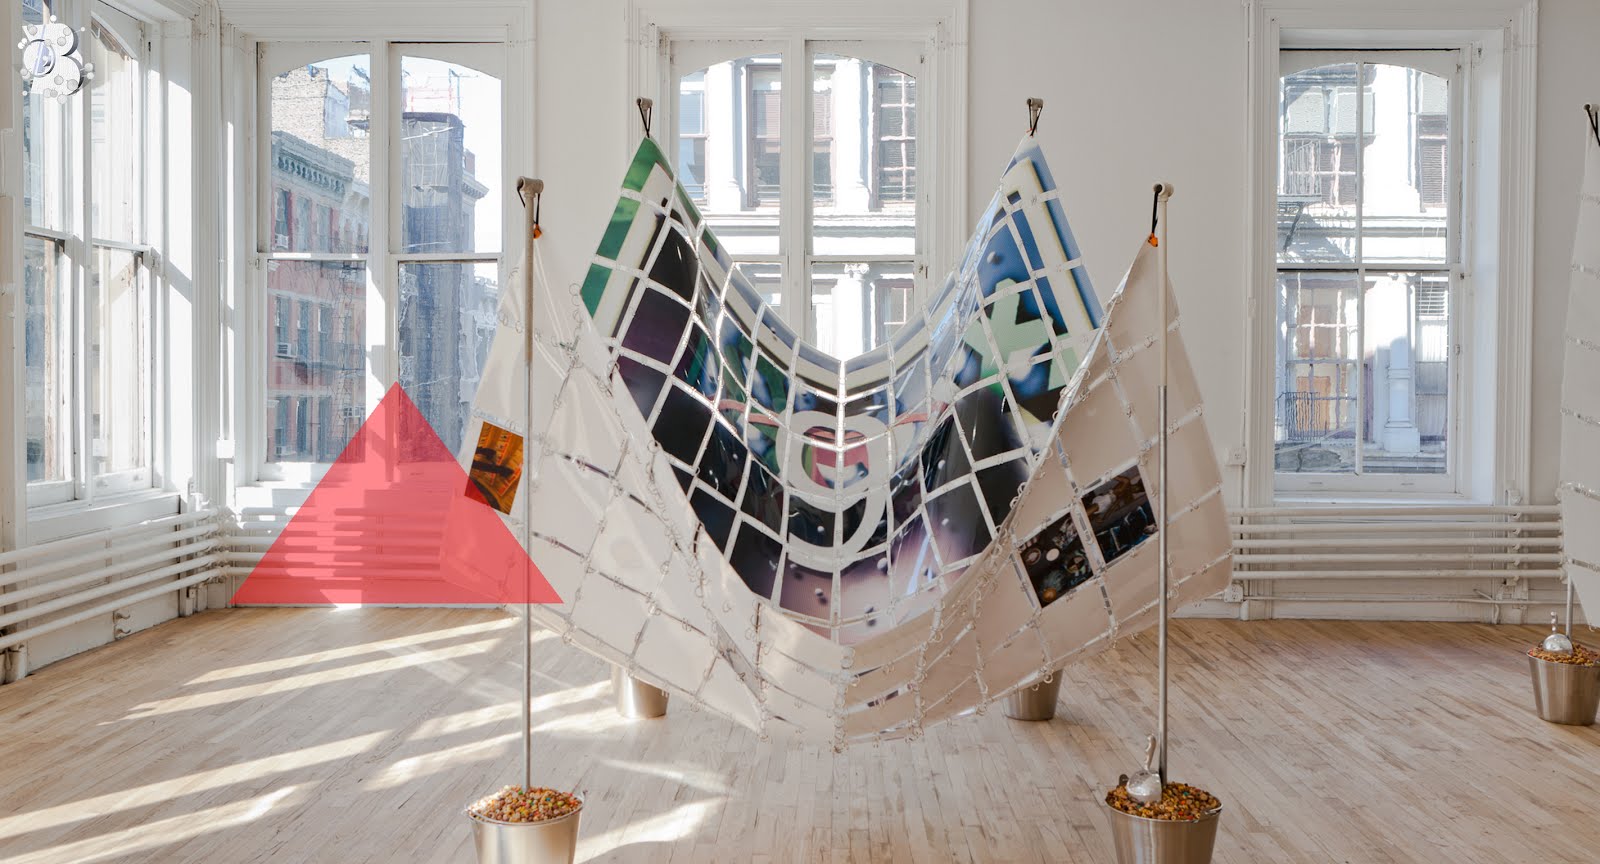 Crib (9 Months) installation view at DUOX4Larkin Artists Space, 2012